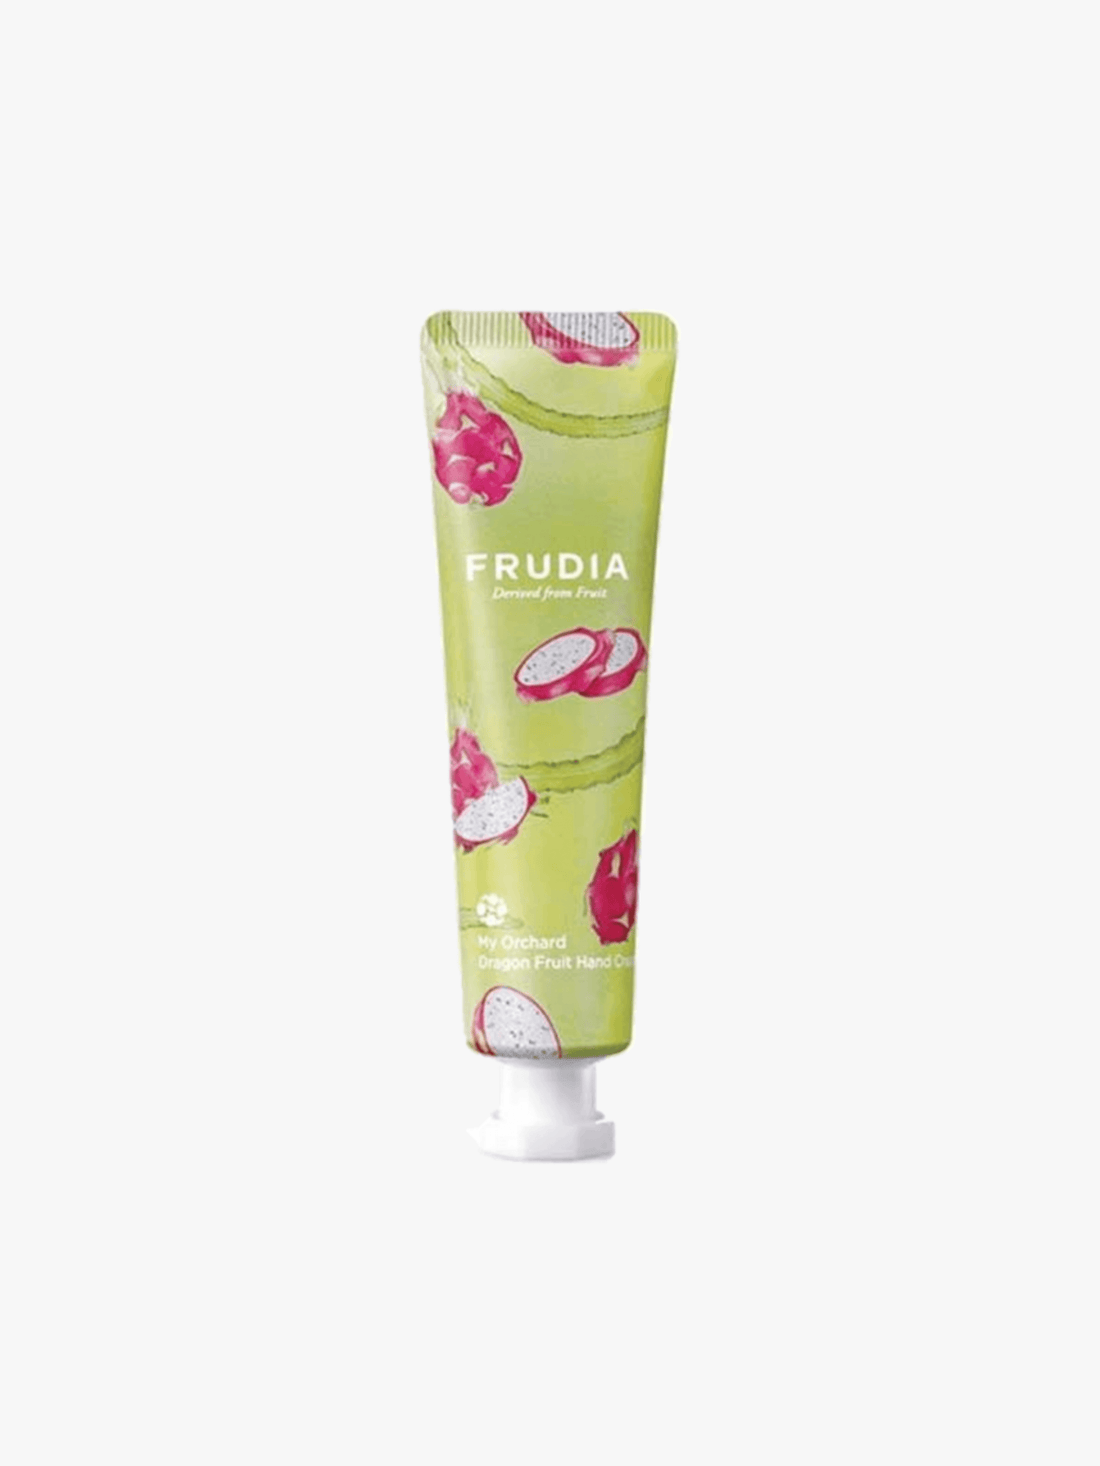 Frudia - Hand cream - My Orchard Hand Cream Dragon Fruit